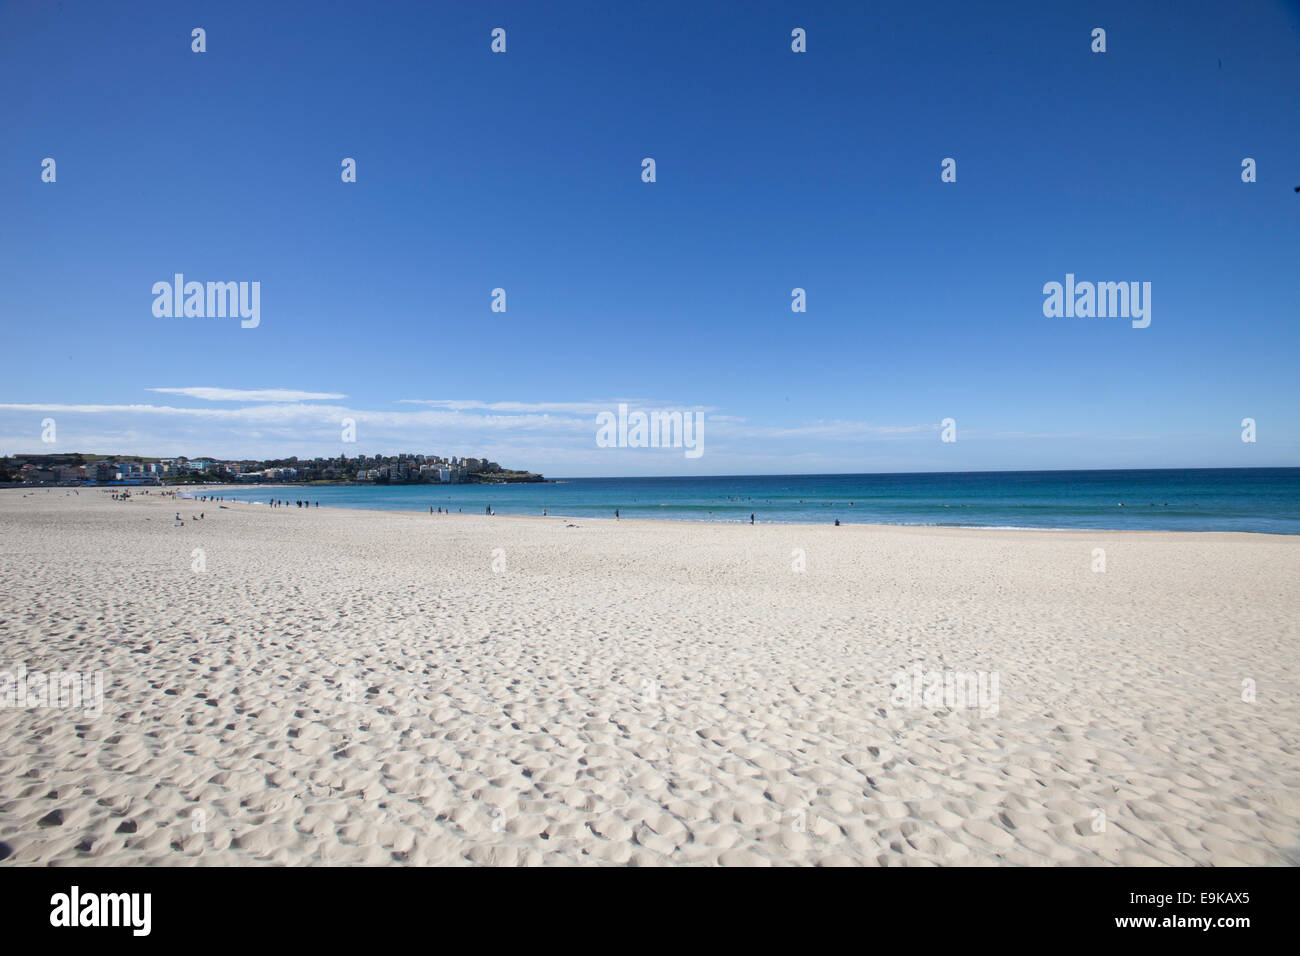 Scenic view of Bondi beach against blue sky, Sydney, Australia Stock Photo